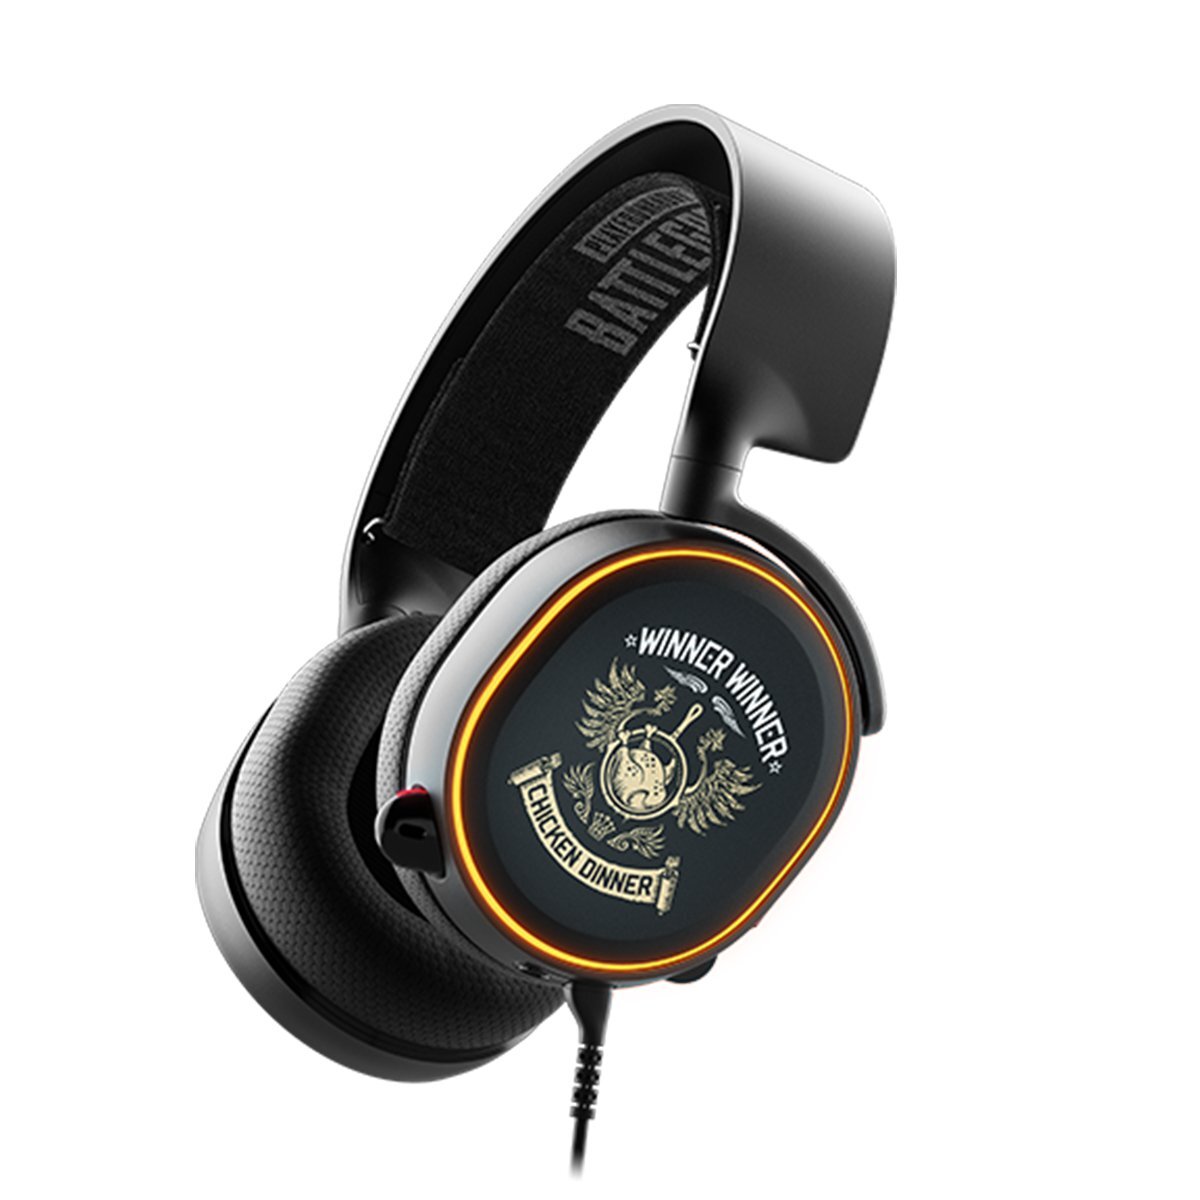 Tai nghe - Headphone Steelseries Arctis 5 PUBG Edition